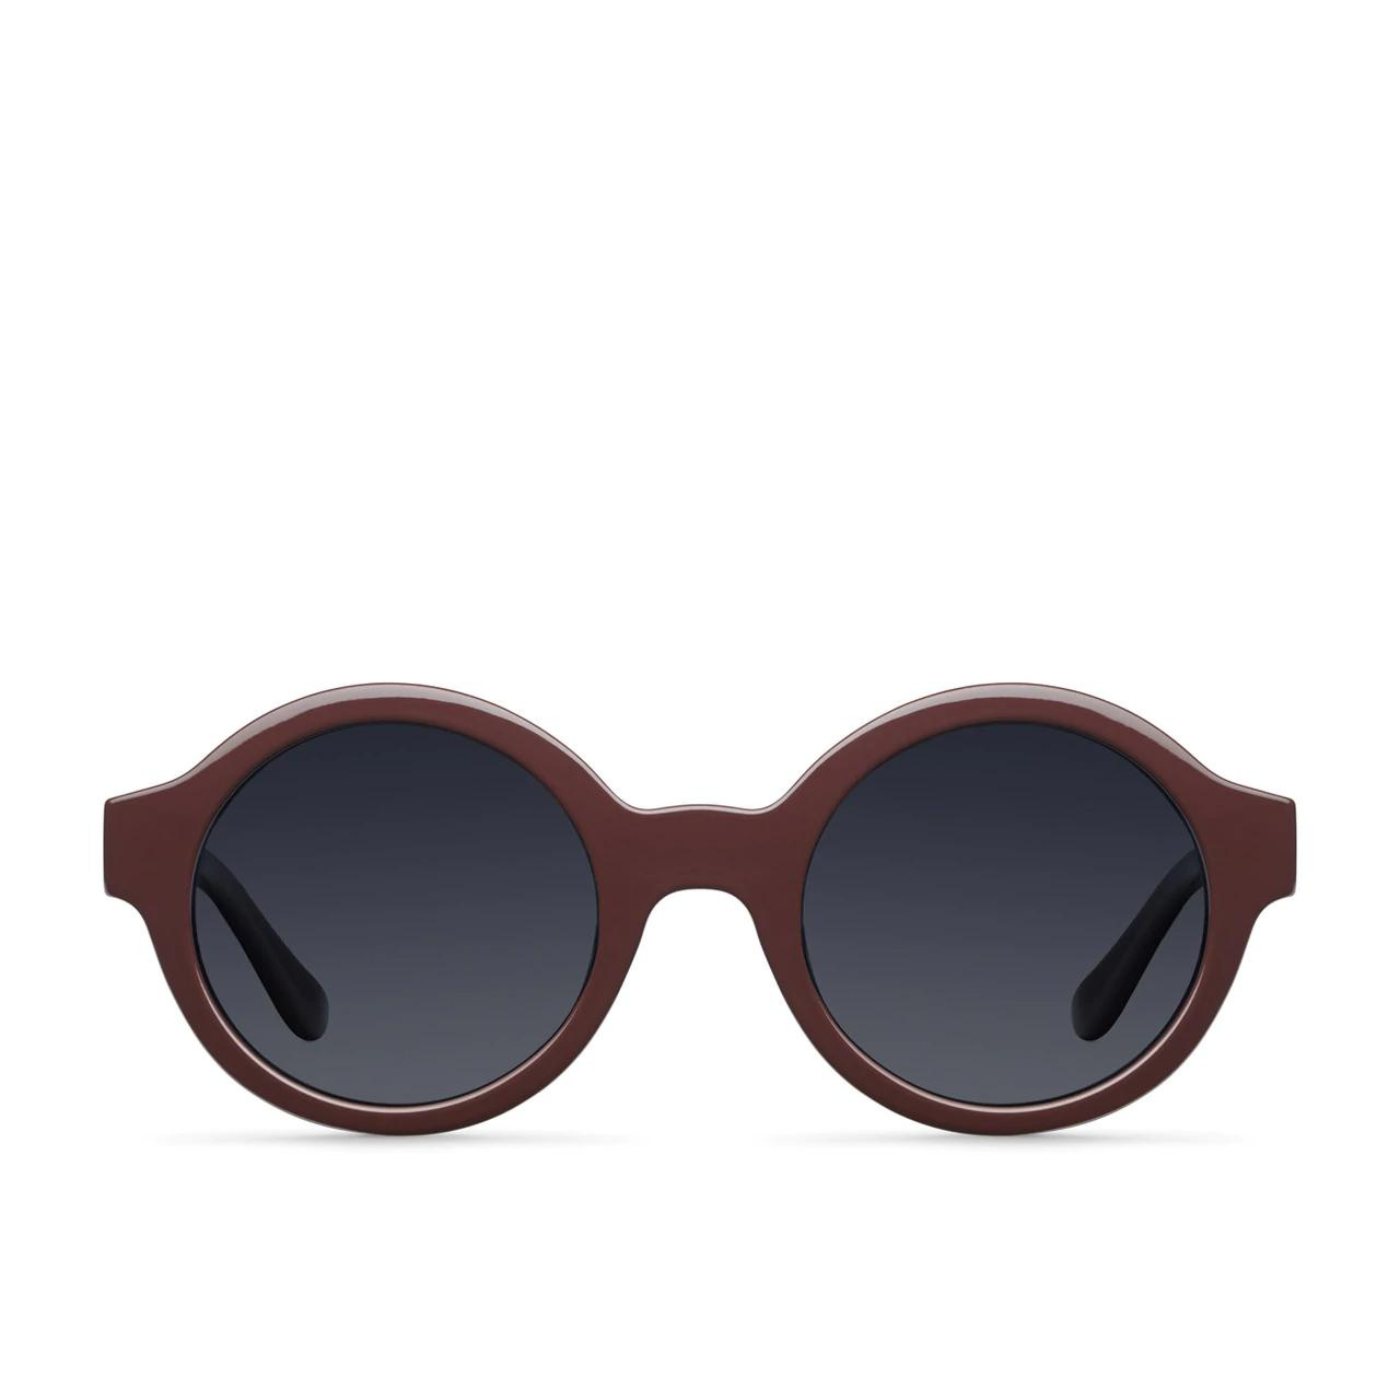 Bashira Coffee Carbon Meller sunglasses